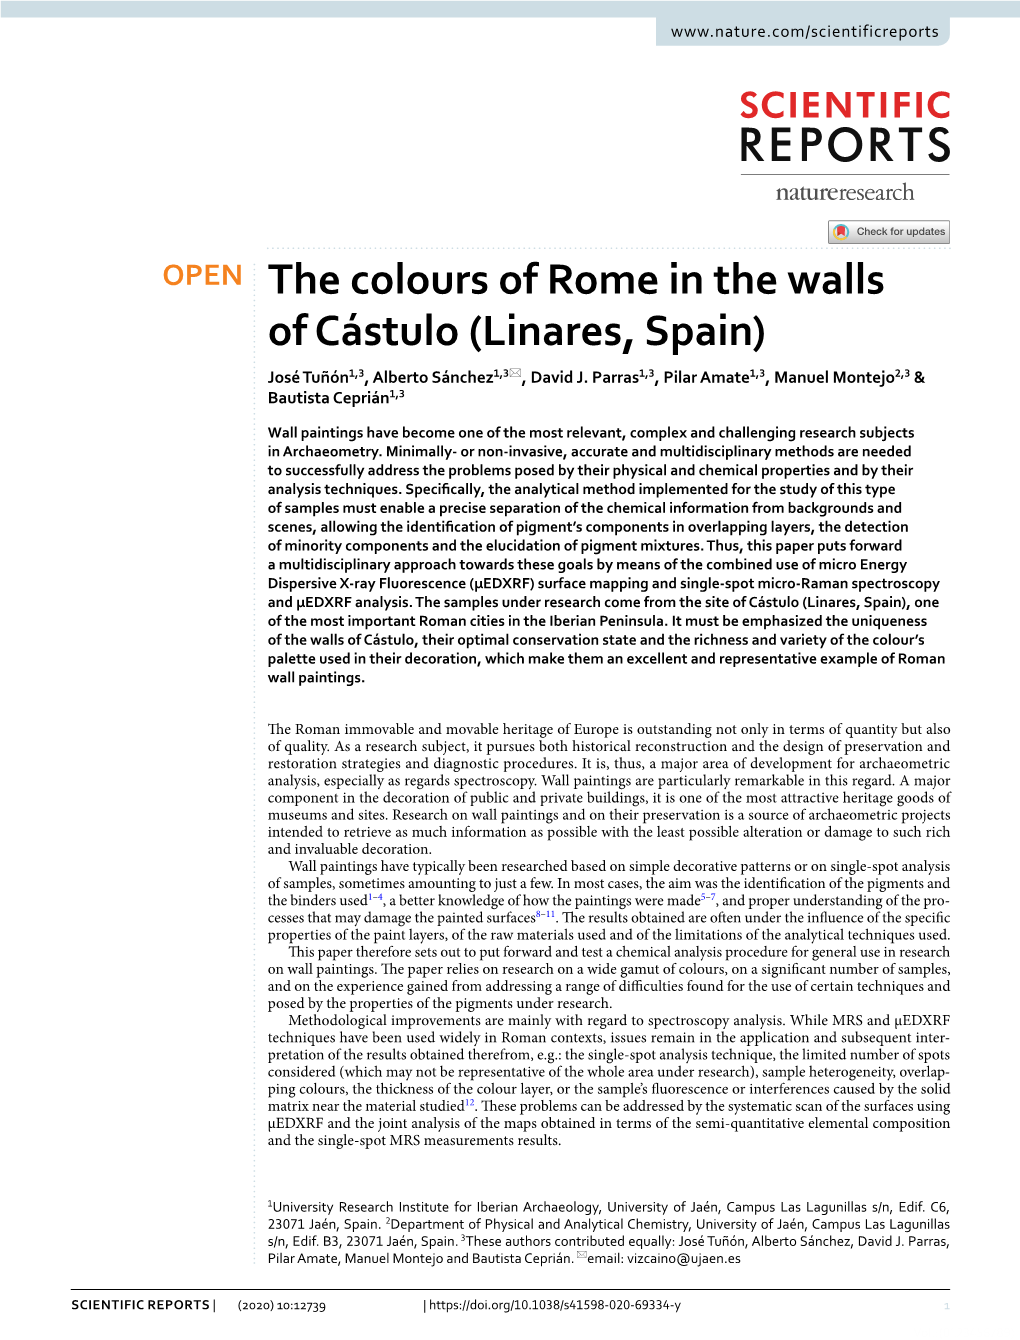 The Colours of Rome in the Walls of Cástulo (Linares, Spain) José Tuñón1,3, Alberto Sánchez1,3*, David J